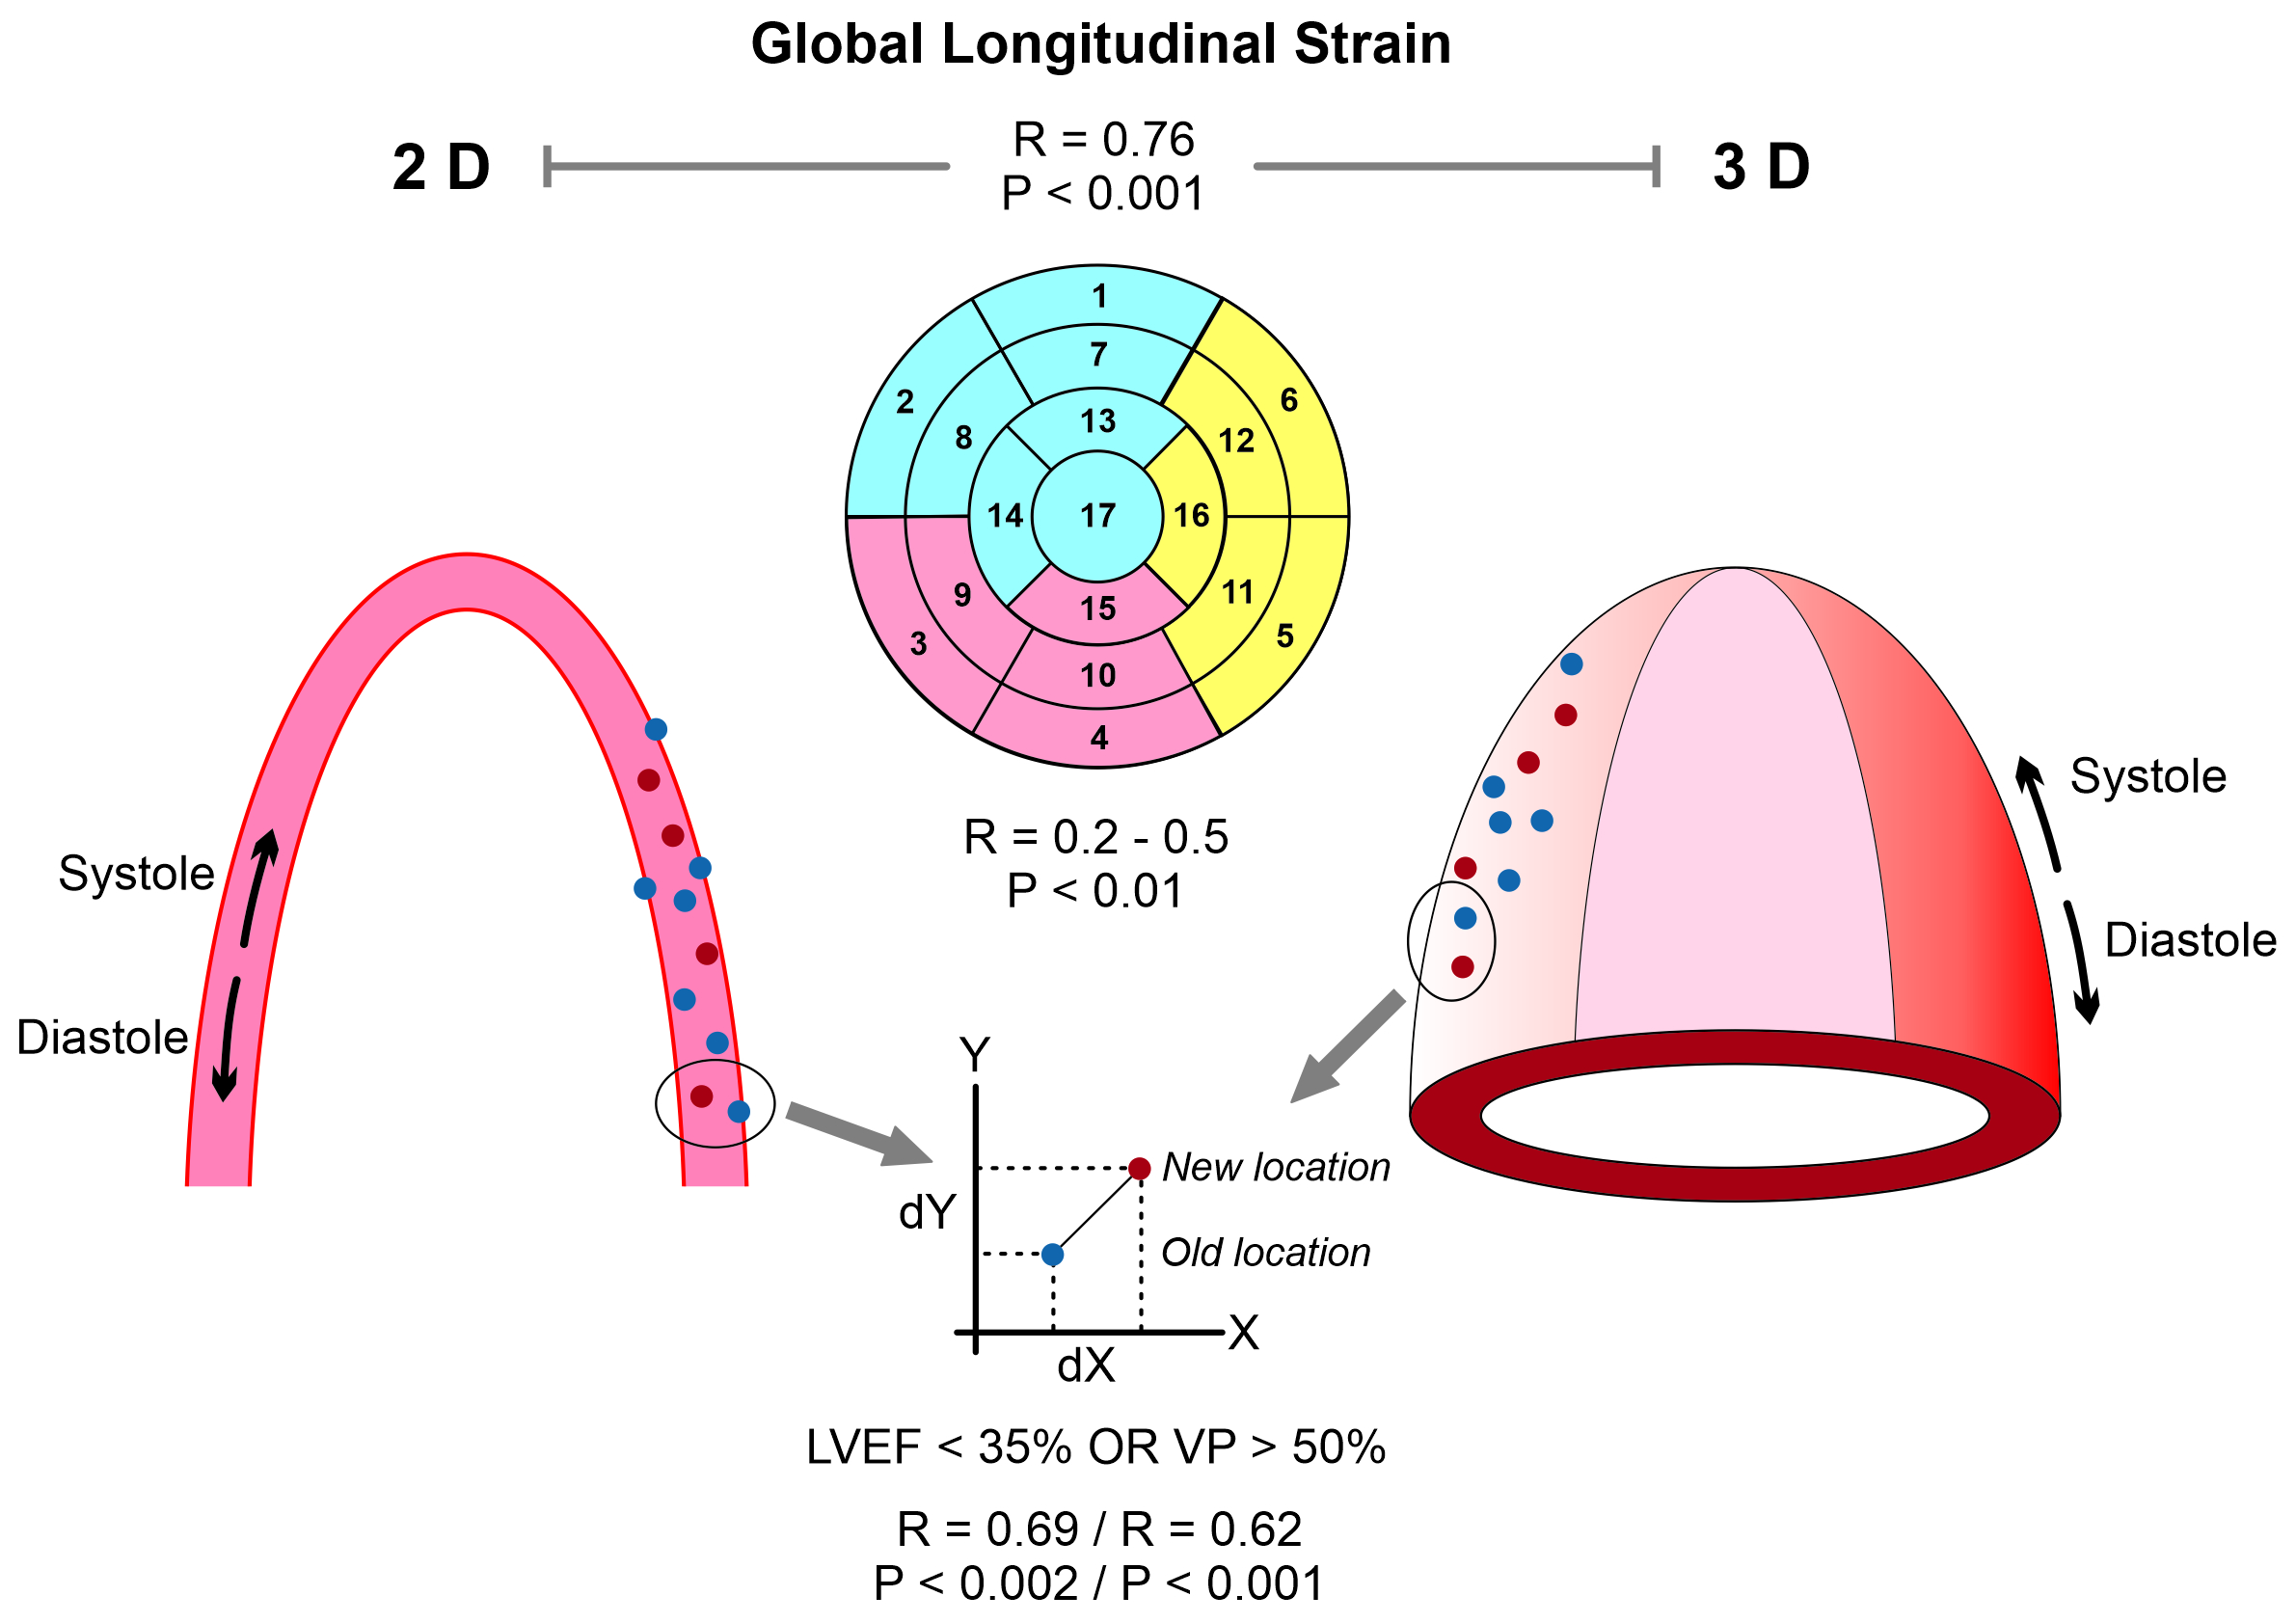 How to standardize measurement of global longitudinal strain